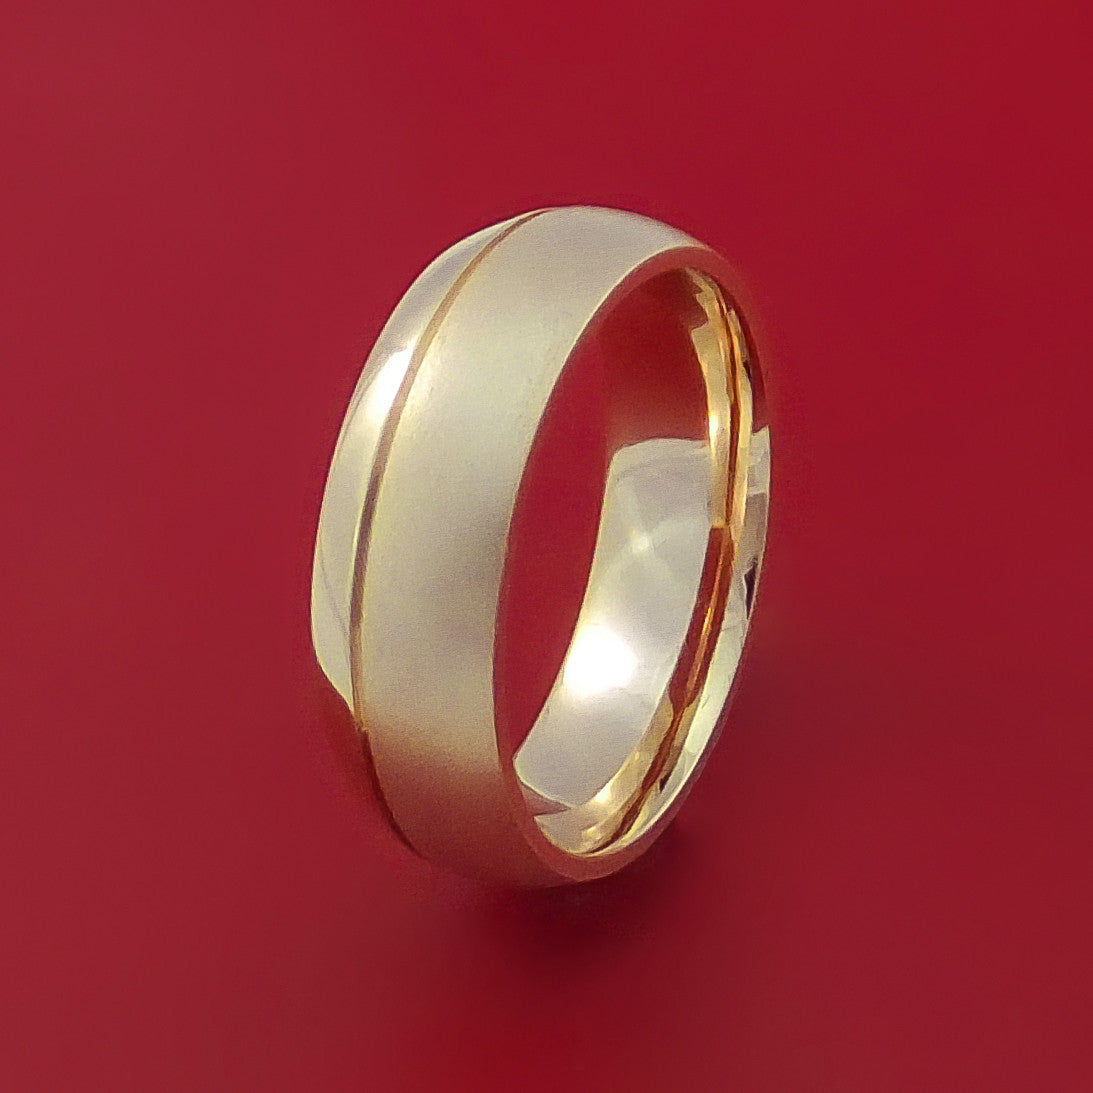 Wedding Band For Men Women 14k Two Tone Gold Ring